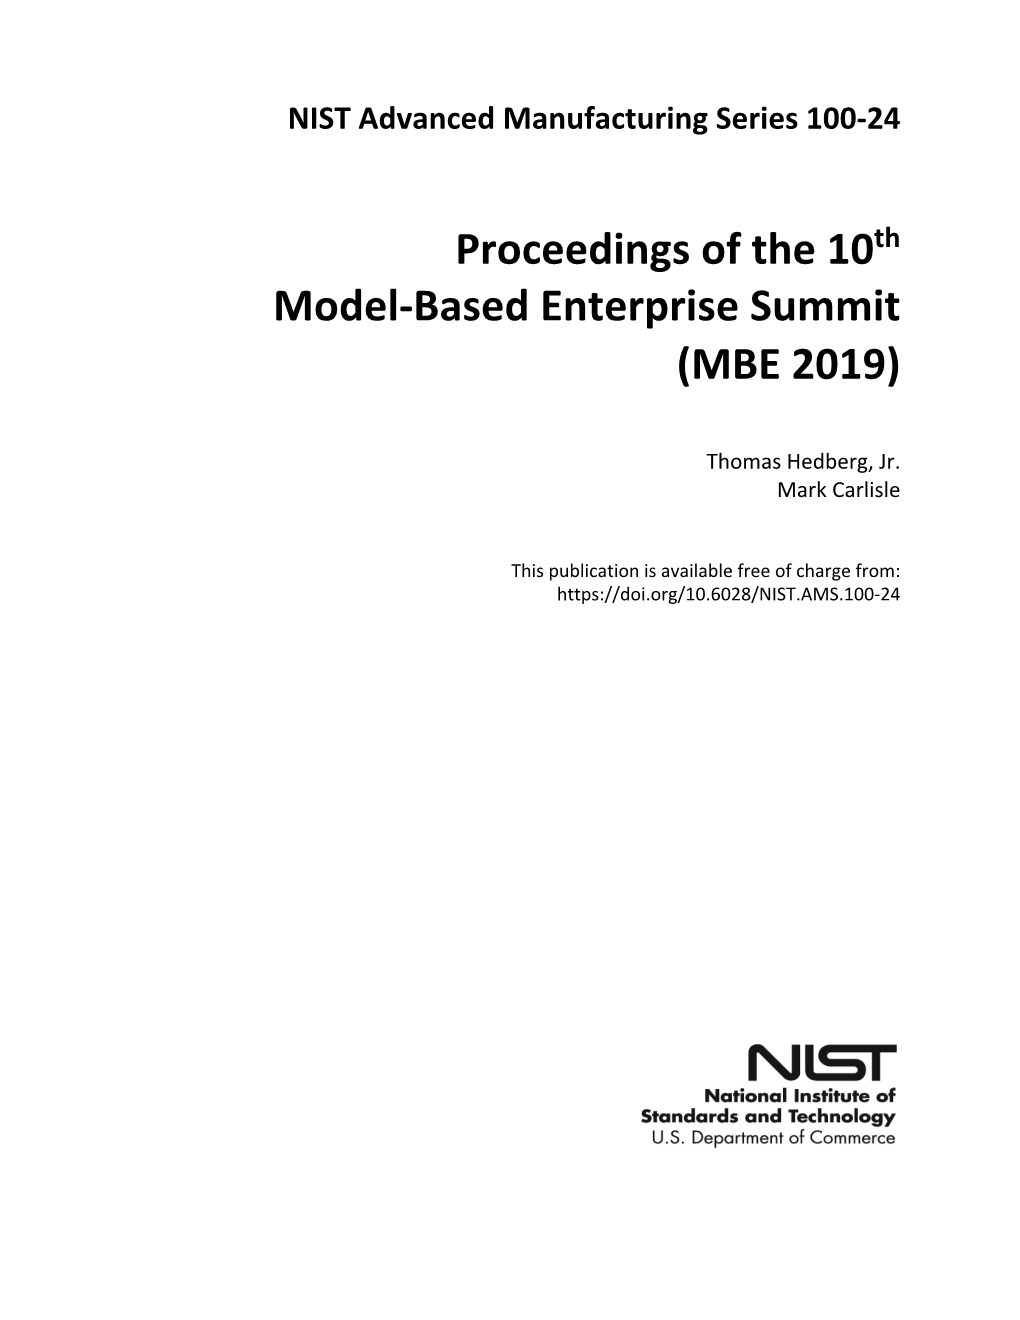 Proceedings of the 10Th Model-Based Enterprise Summit (MBE 2019)